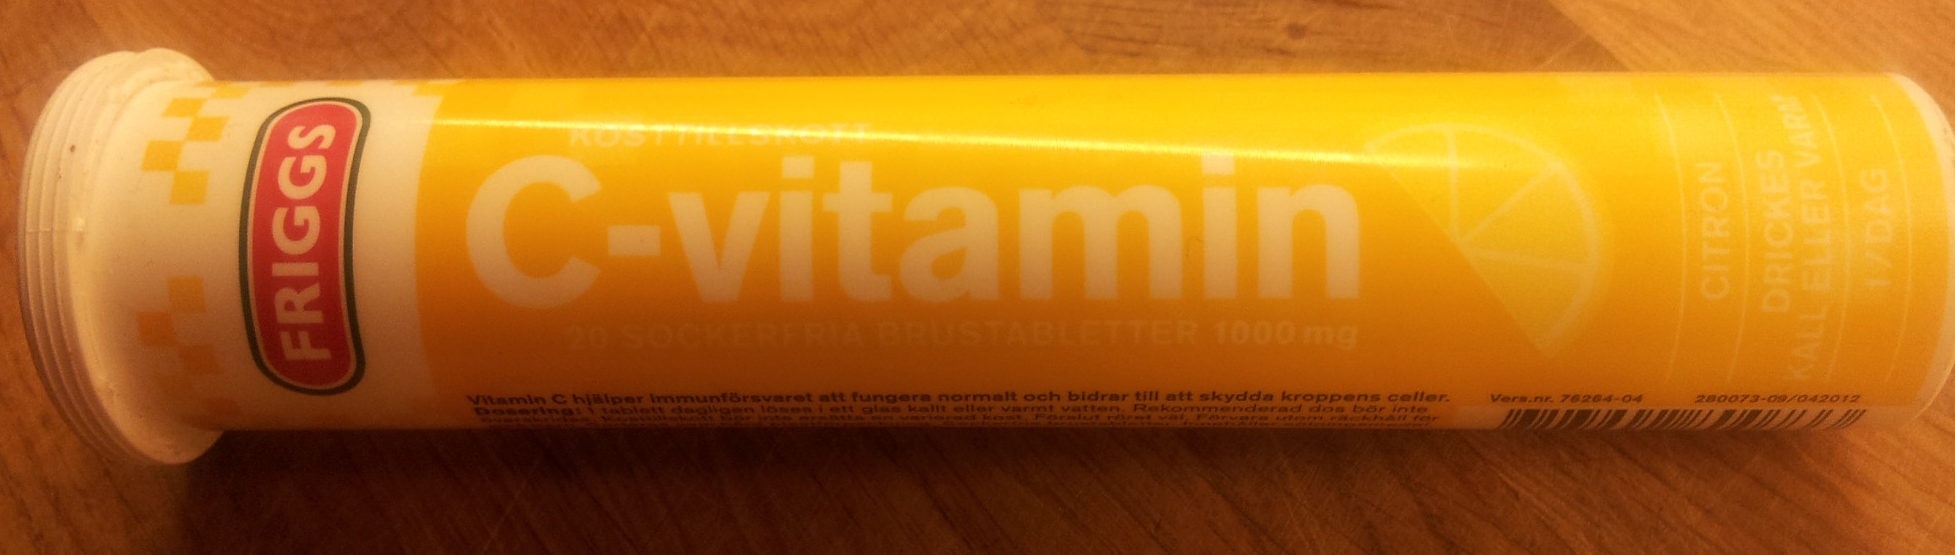 C-vitamin citron - Produkt